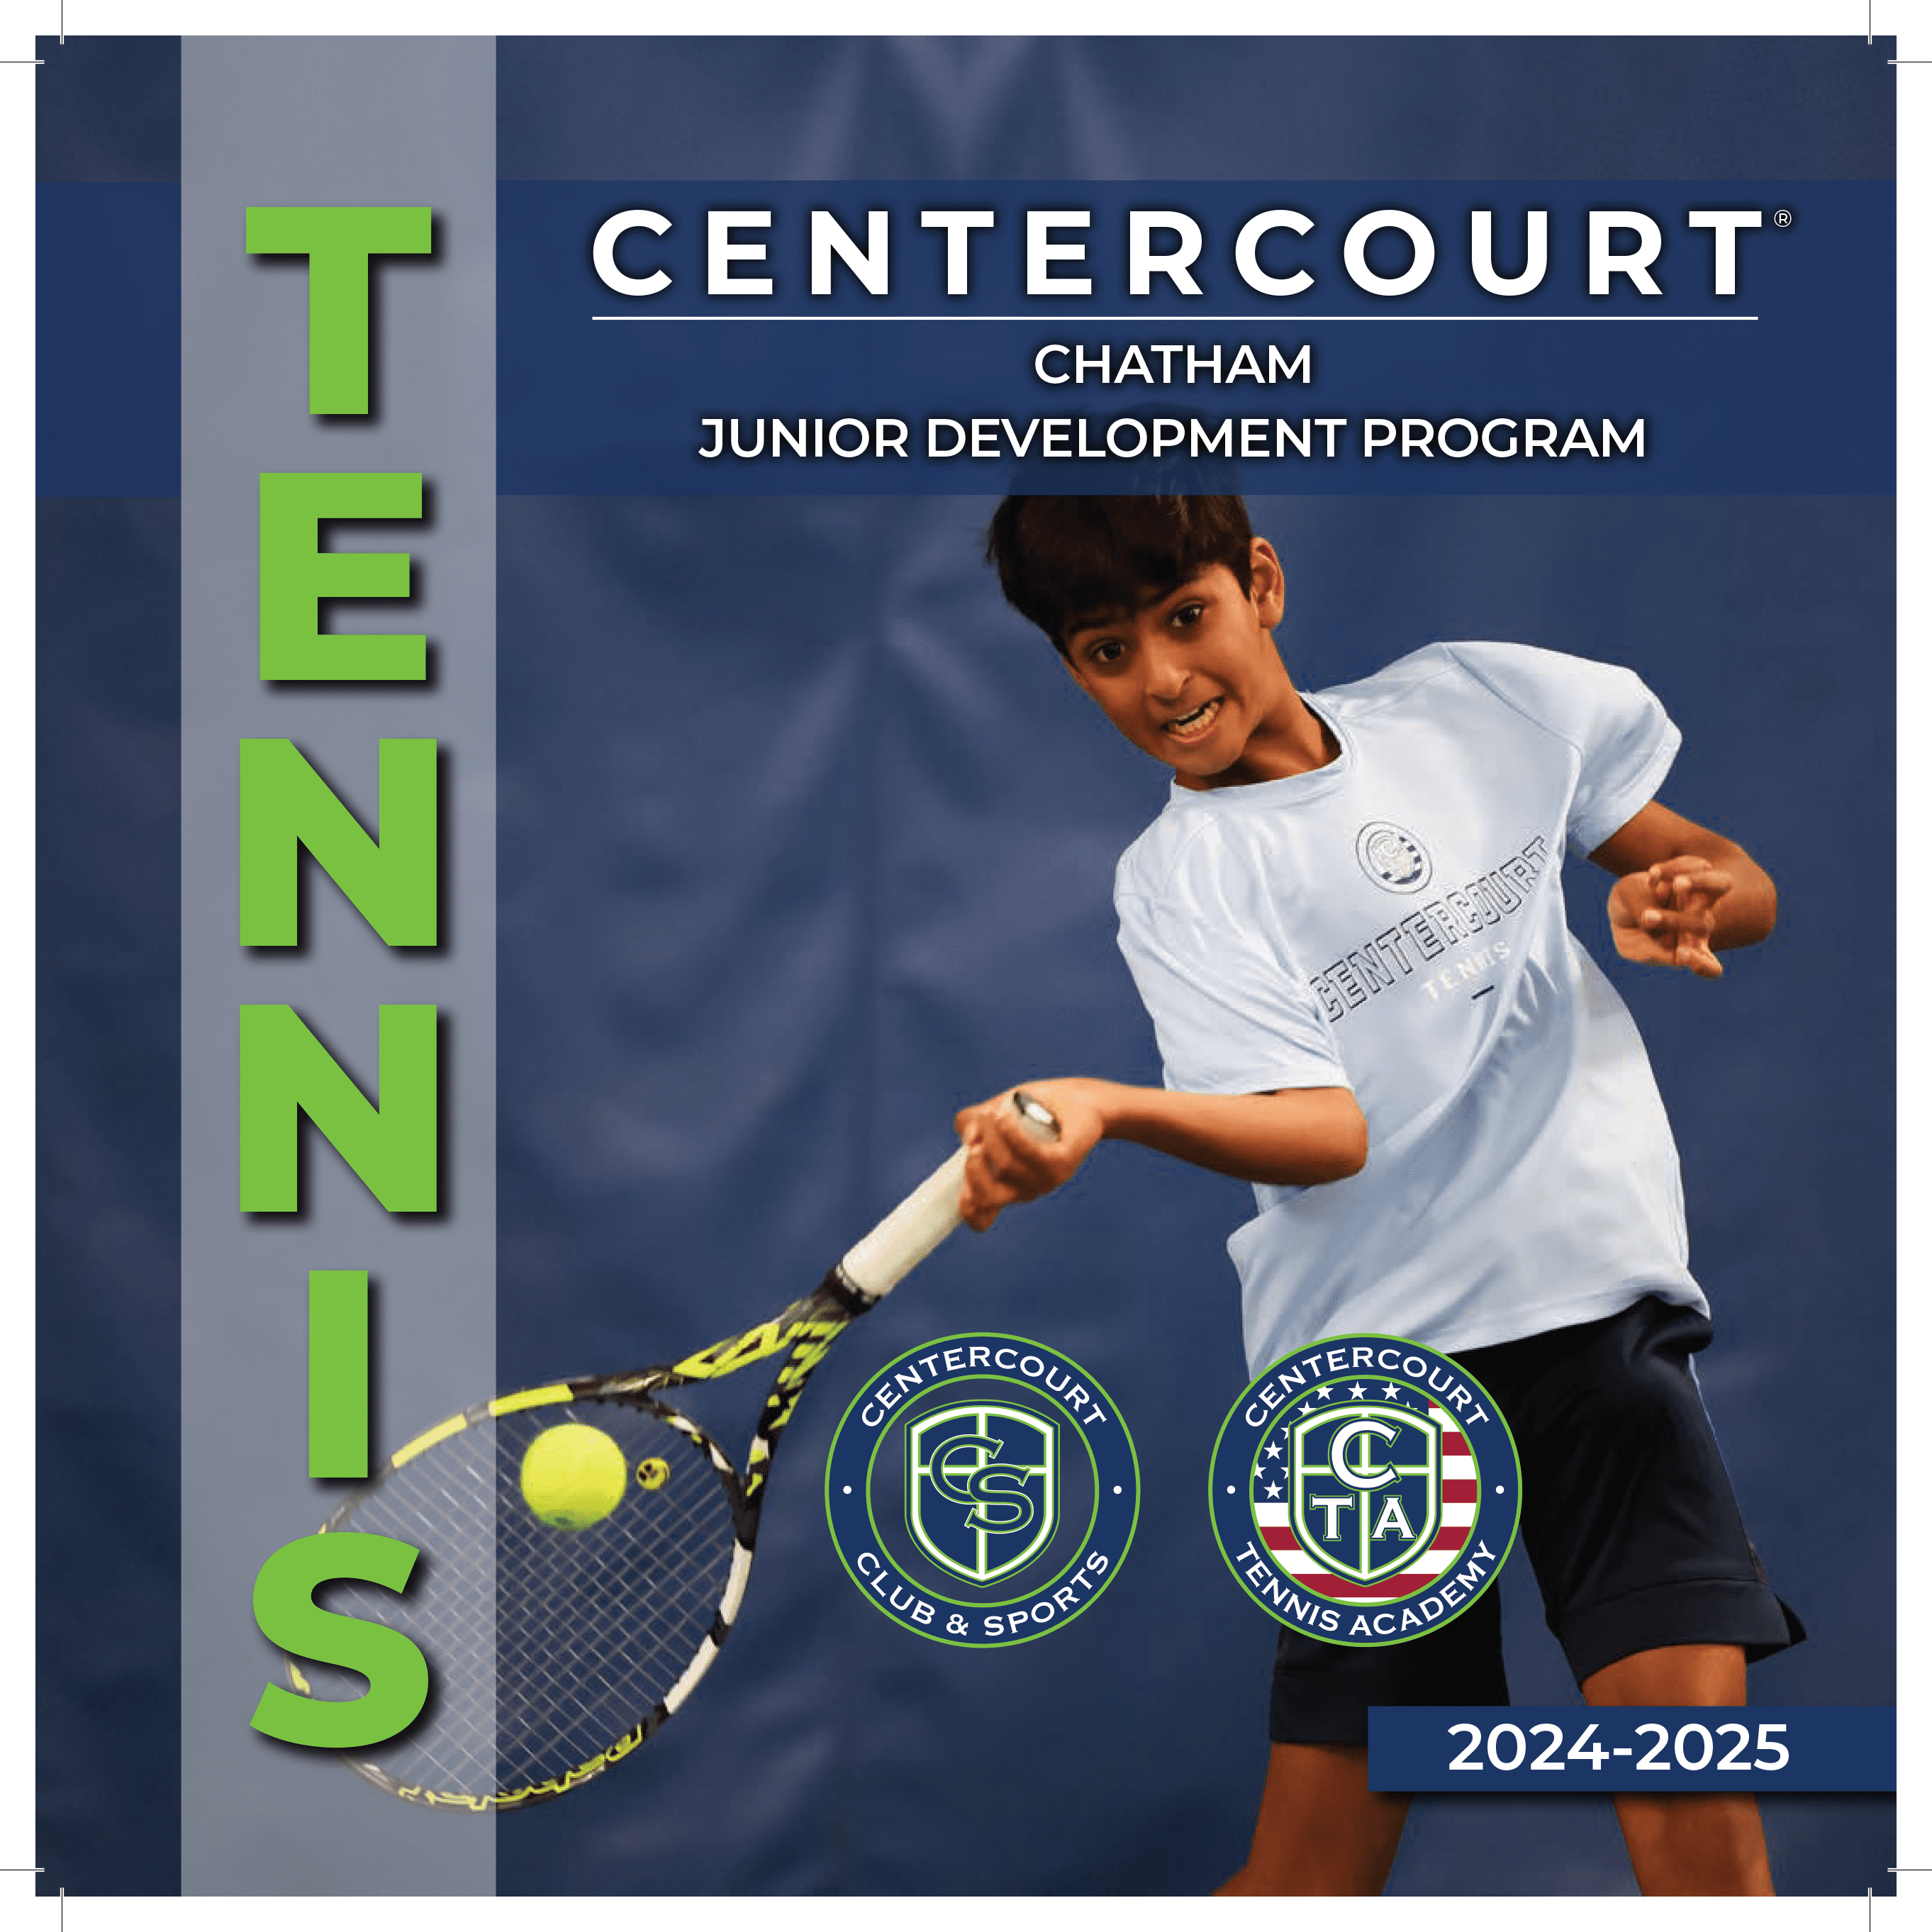 Junior Development Tennis Programs